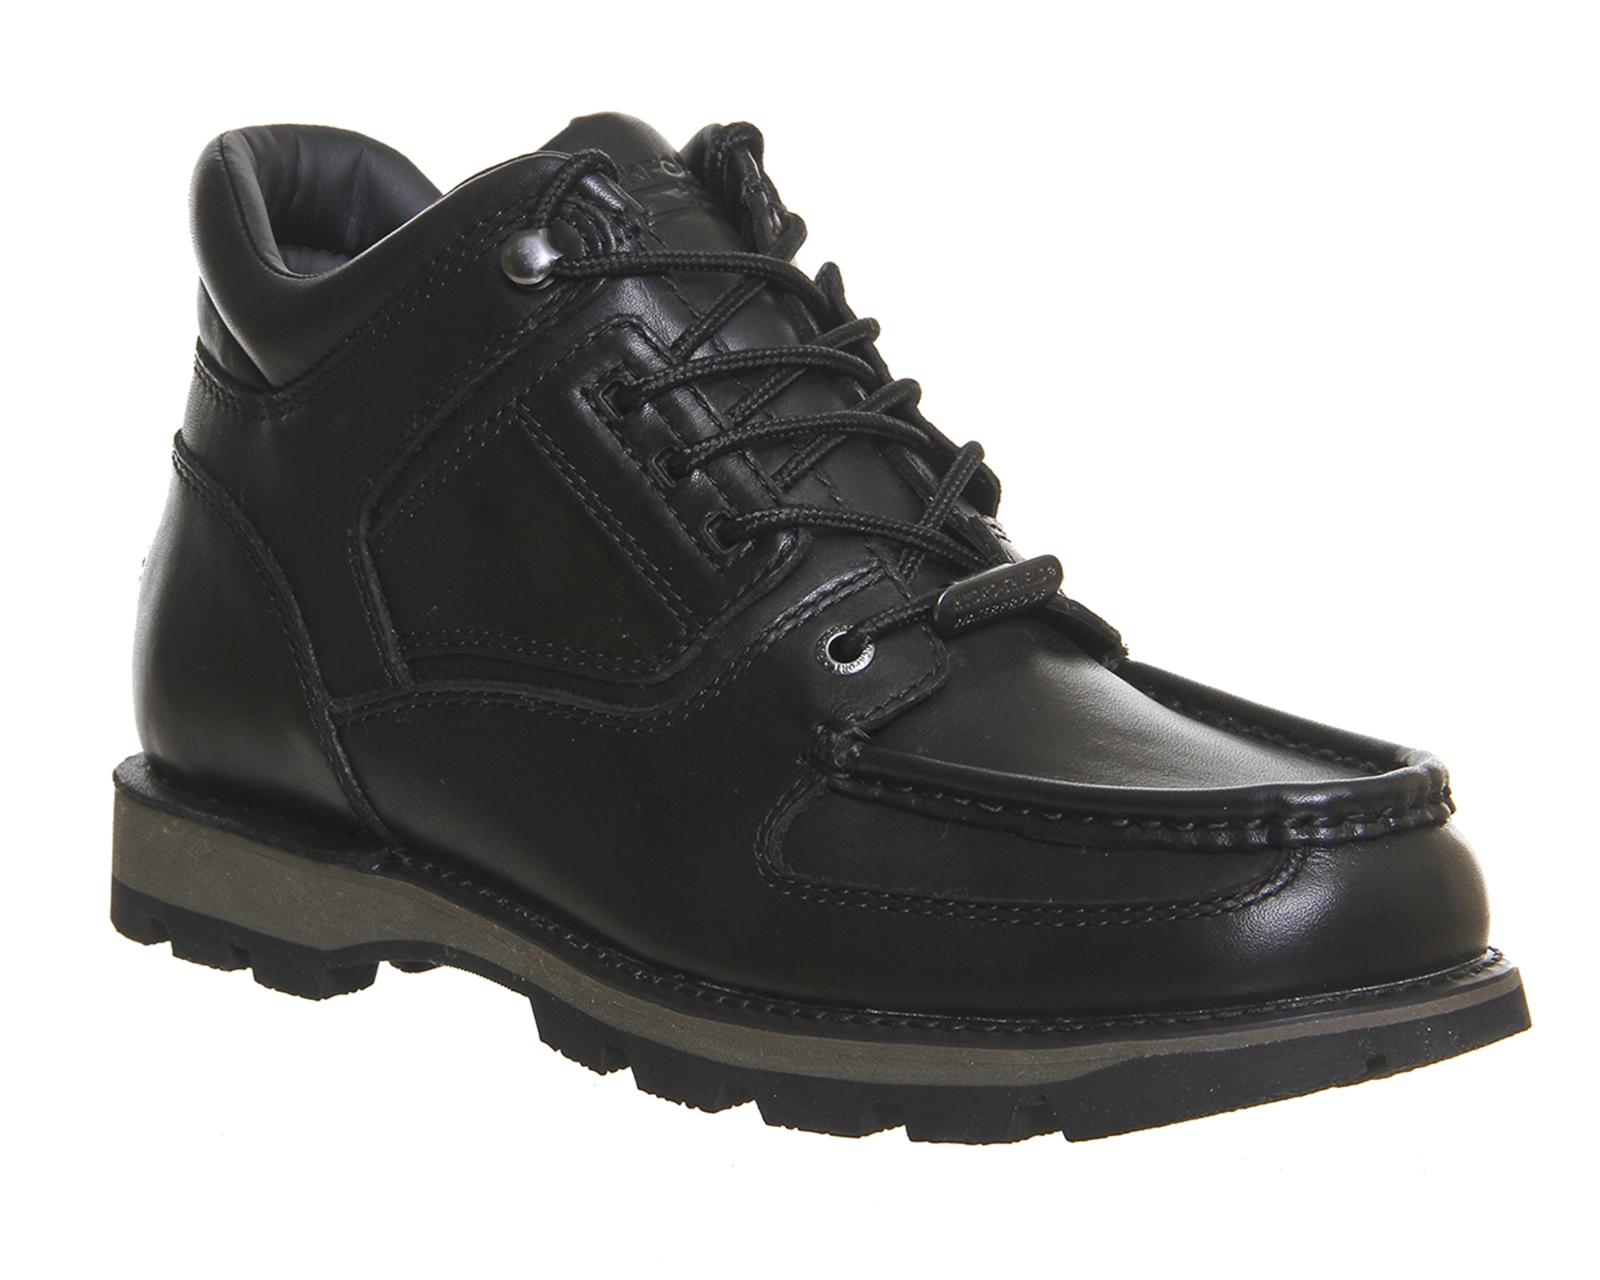 Rockport Leather Umbwe Boots in Black for Men - Lyst